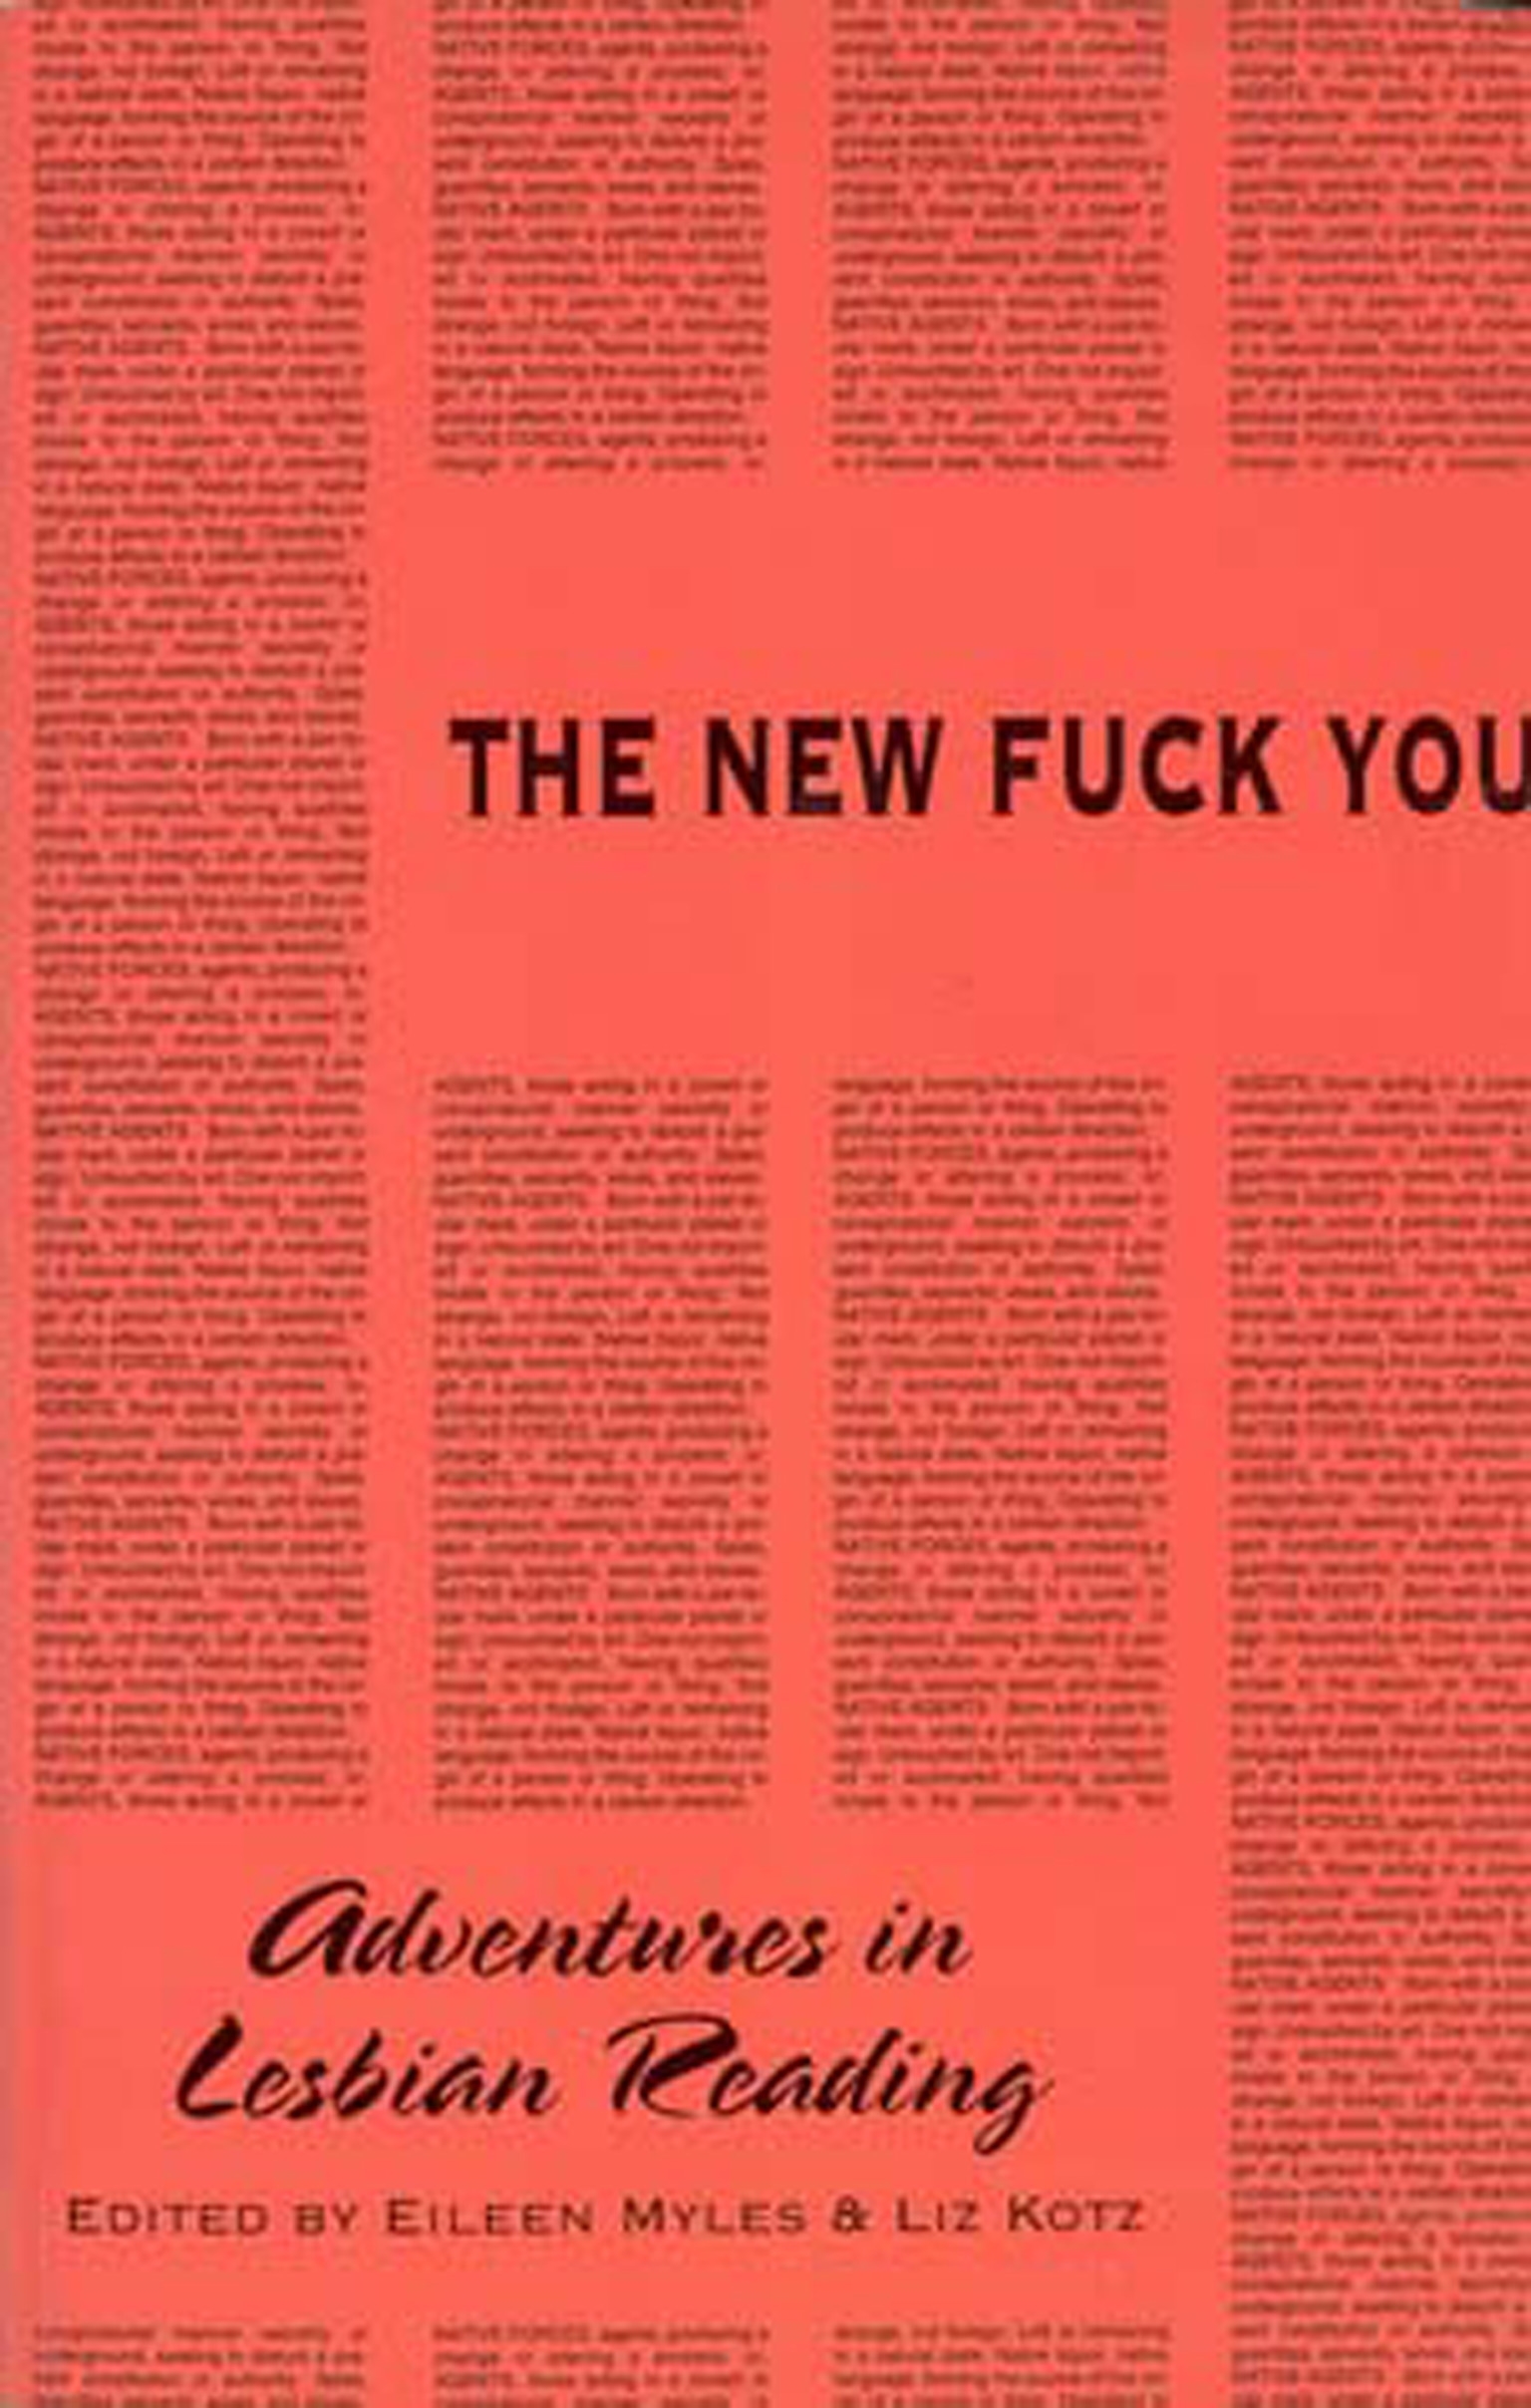 The New Fuck You by Eileen Myles - Penguin Books Australia